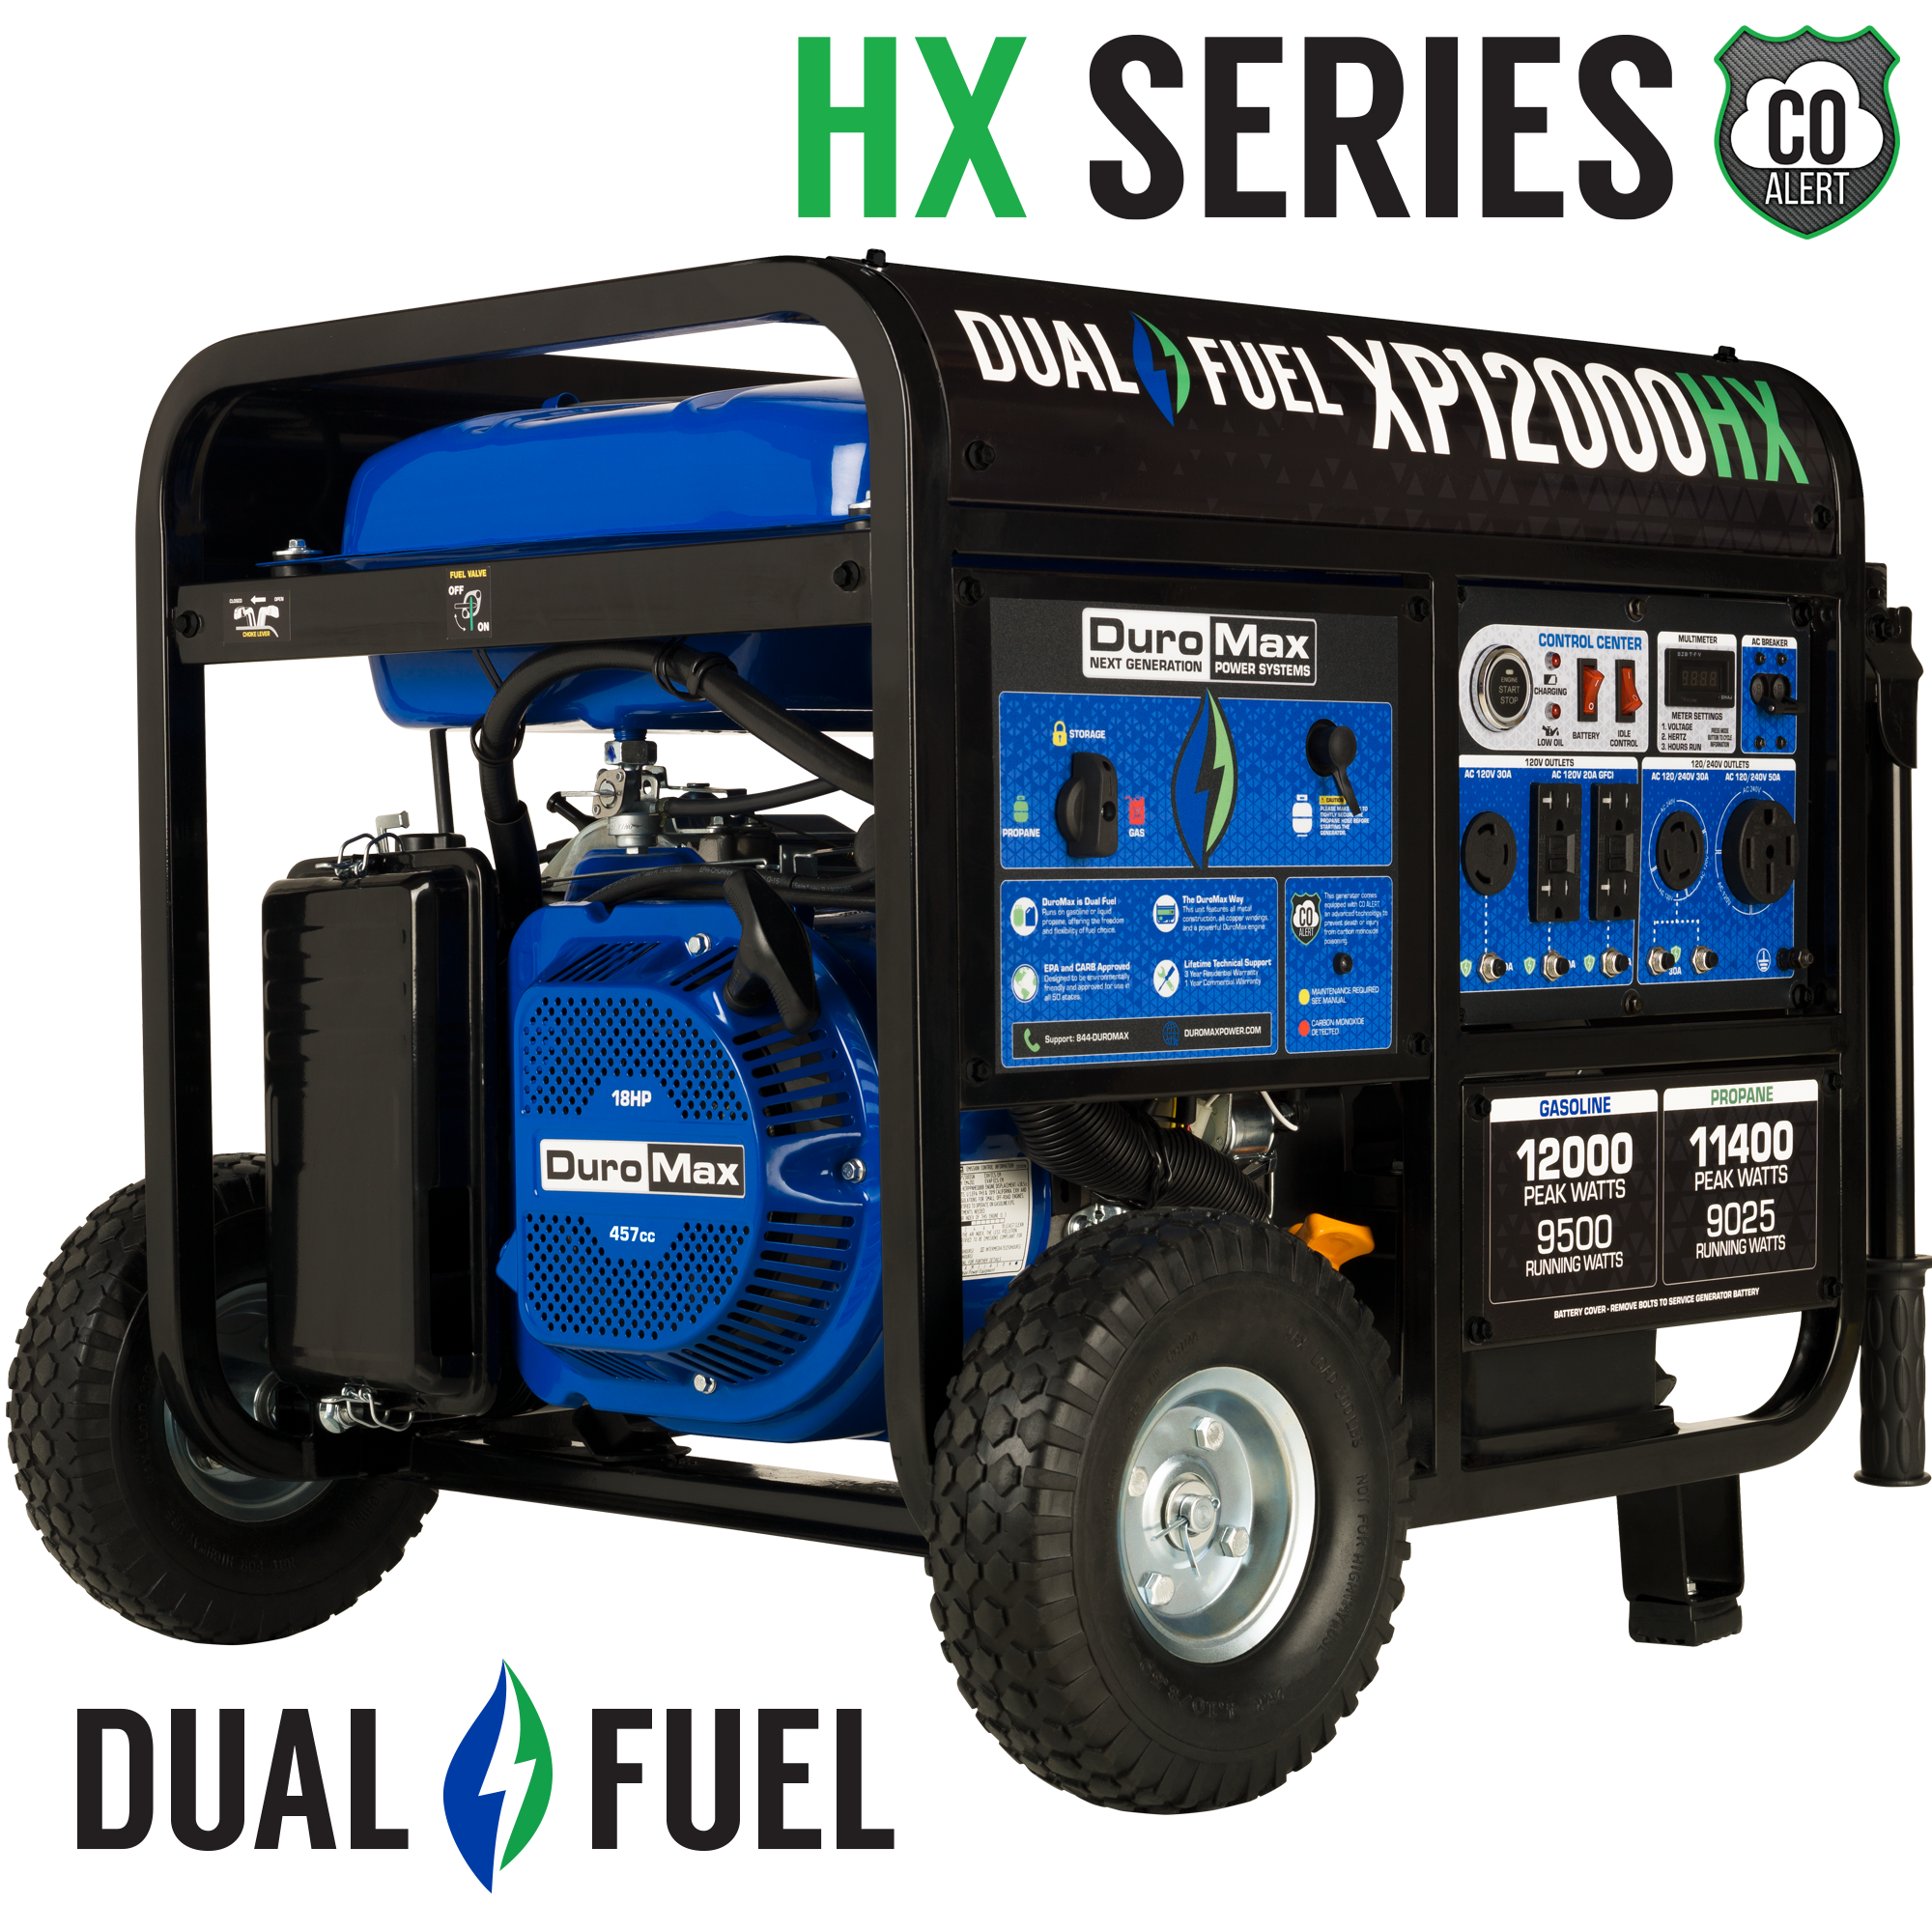 DuroMax 12,000-Watt Dual Fuel Gas Propane Portable Generator with CO Alert